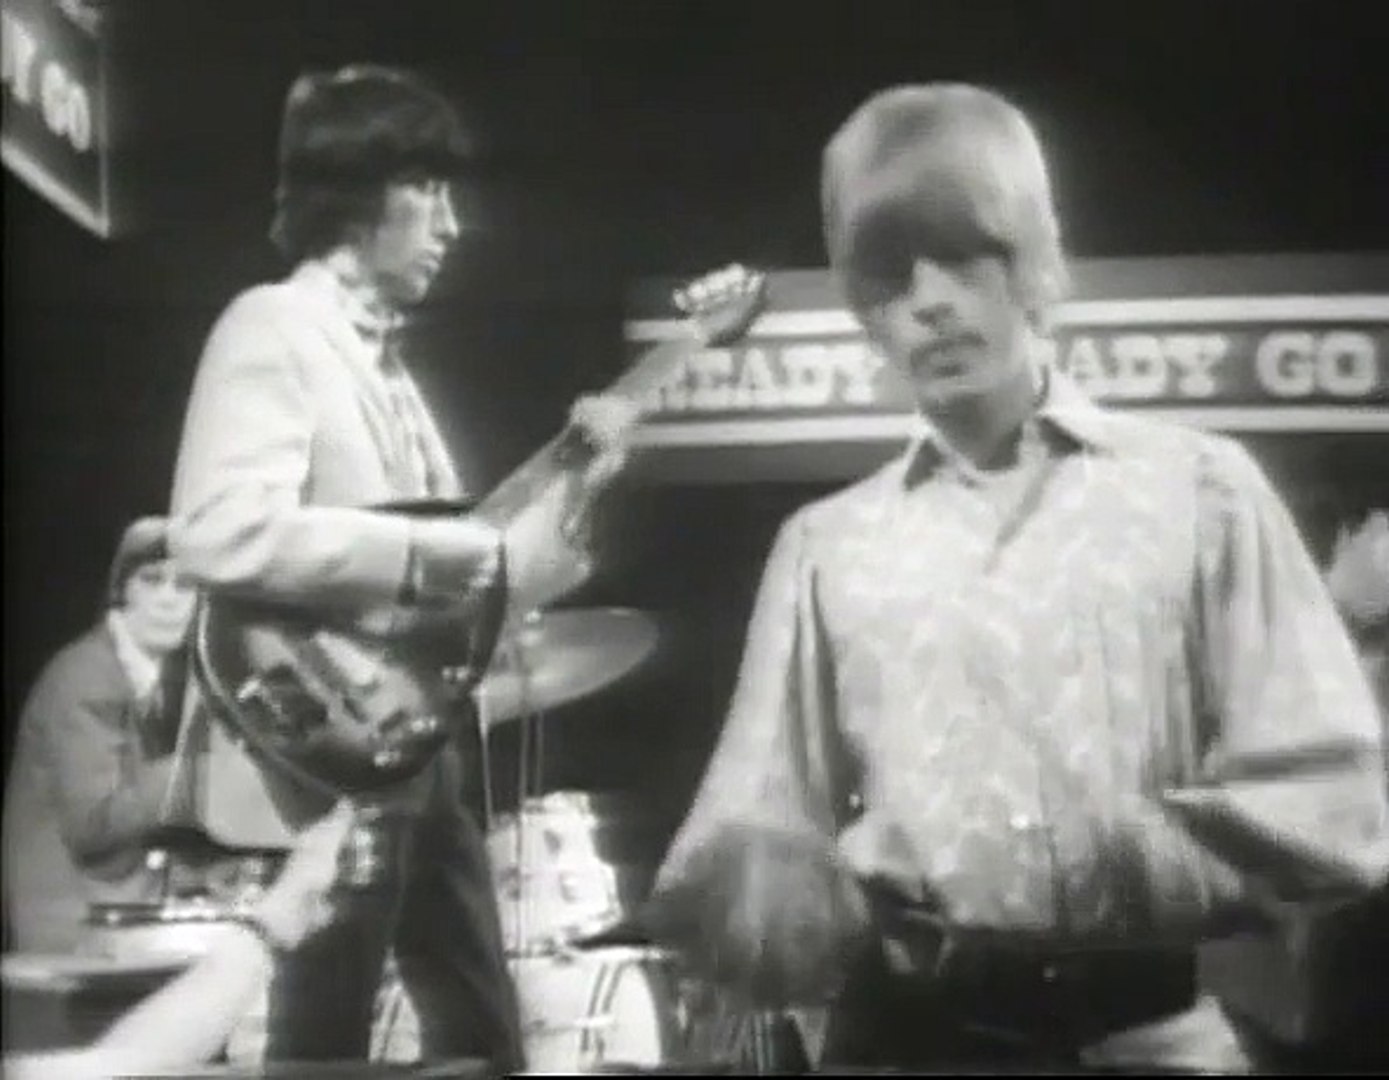 Rolling Stones - Under my thumb 05-27-1967